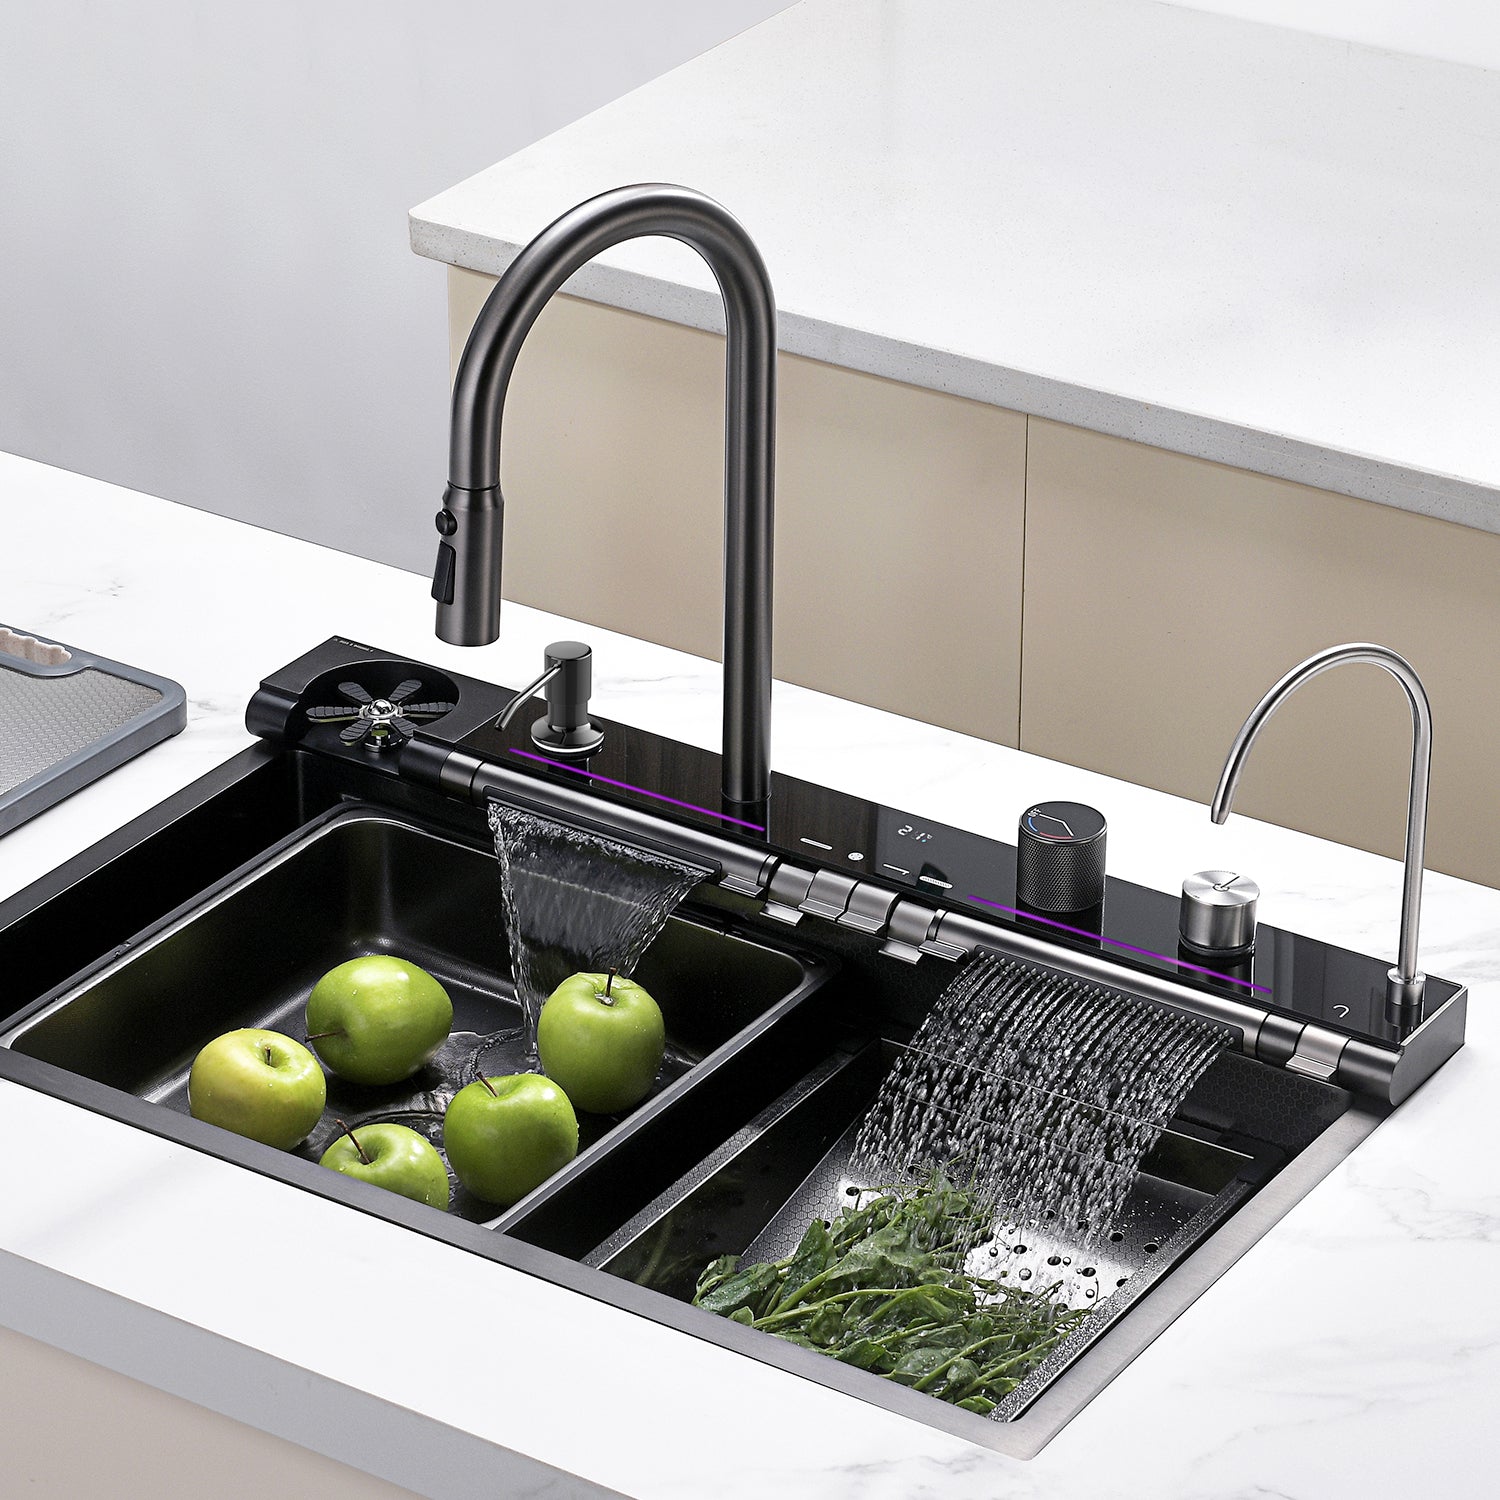 Lefton Adjustable Waterfall Faucet Kitchen Sink with Digital Temperature Display & LED Lighting-KS2207 -Kitchen Sinks-